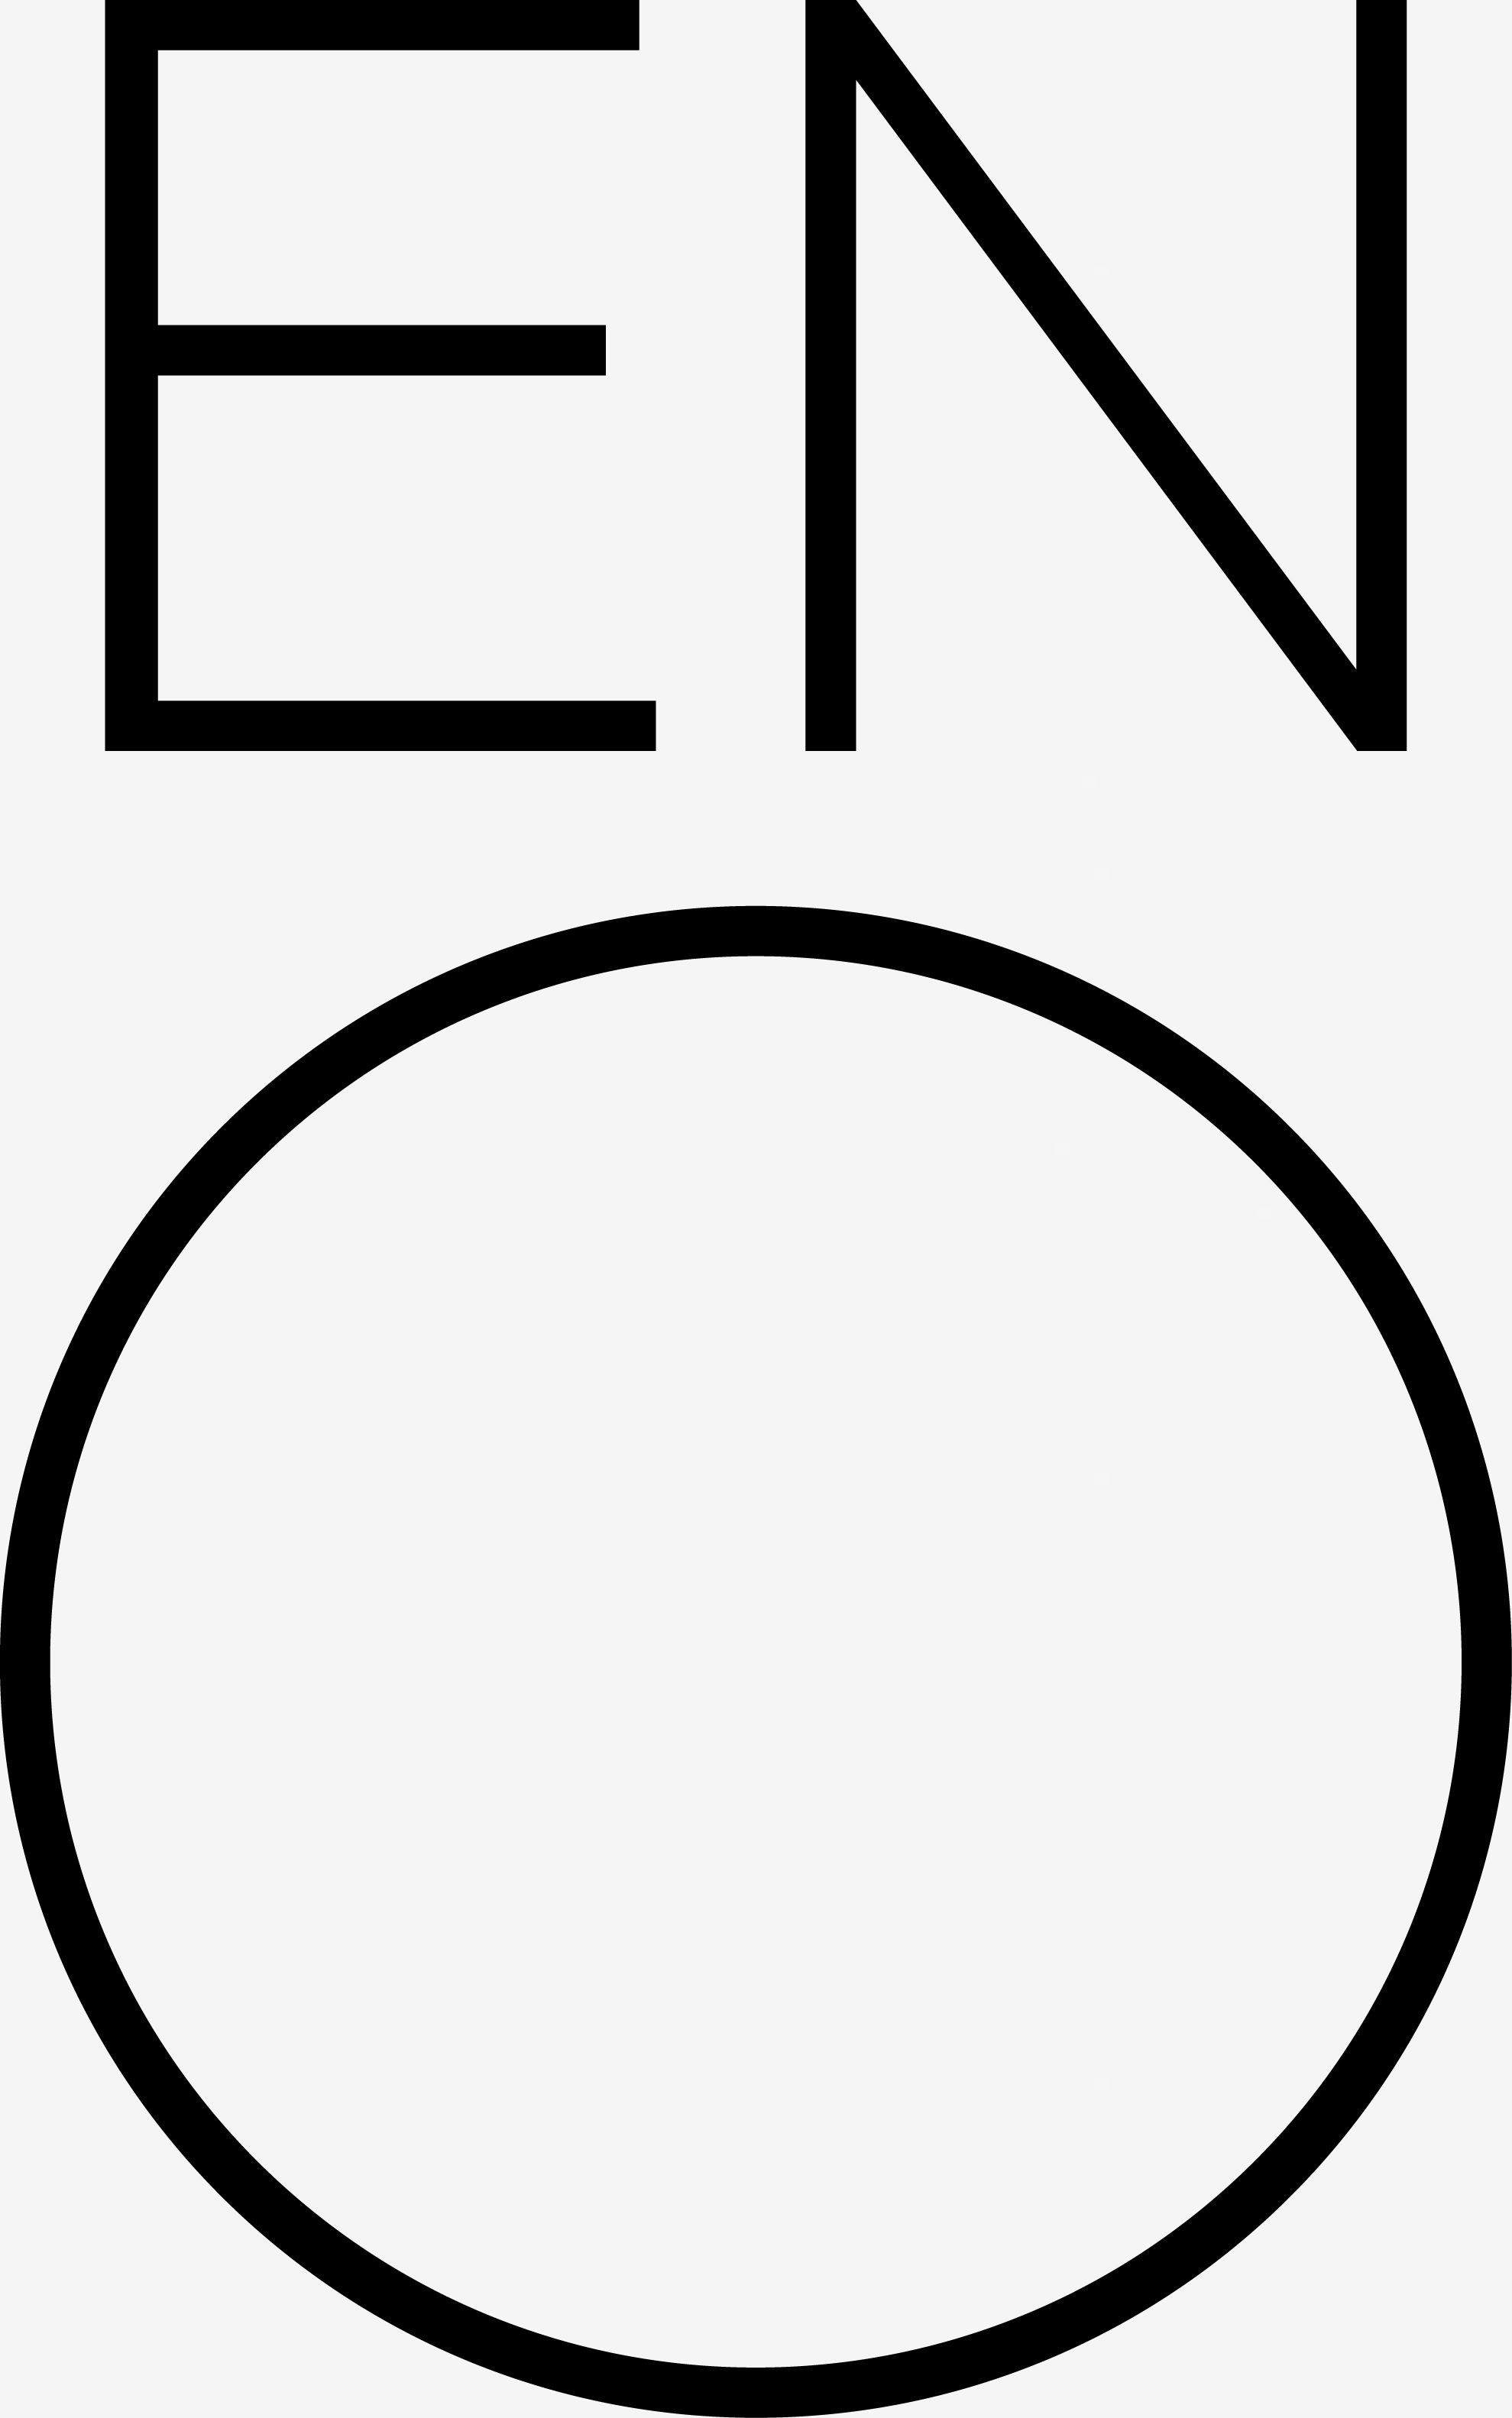 ENO logo